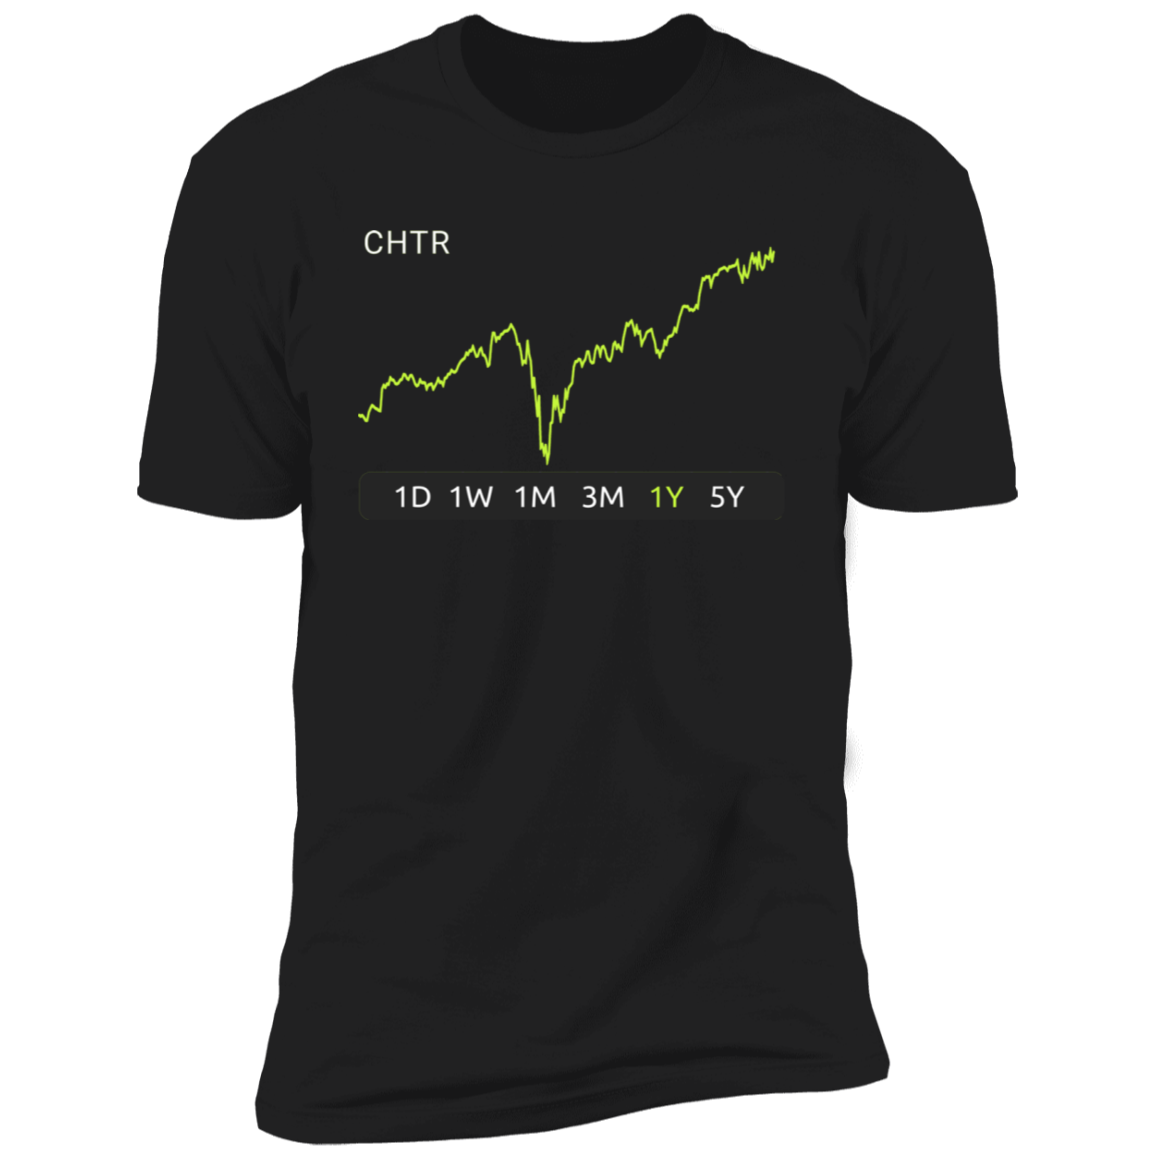 CHTR Stock 1y Premium T-Shirt